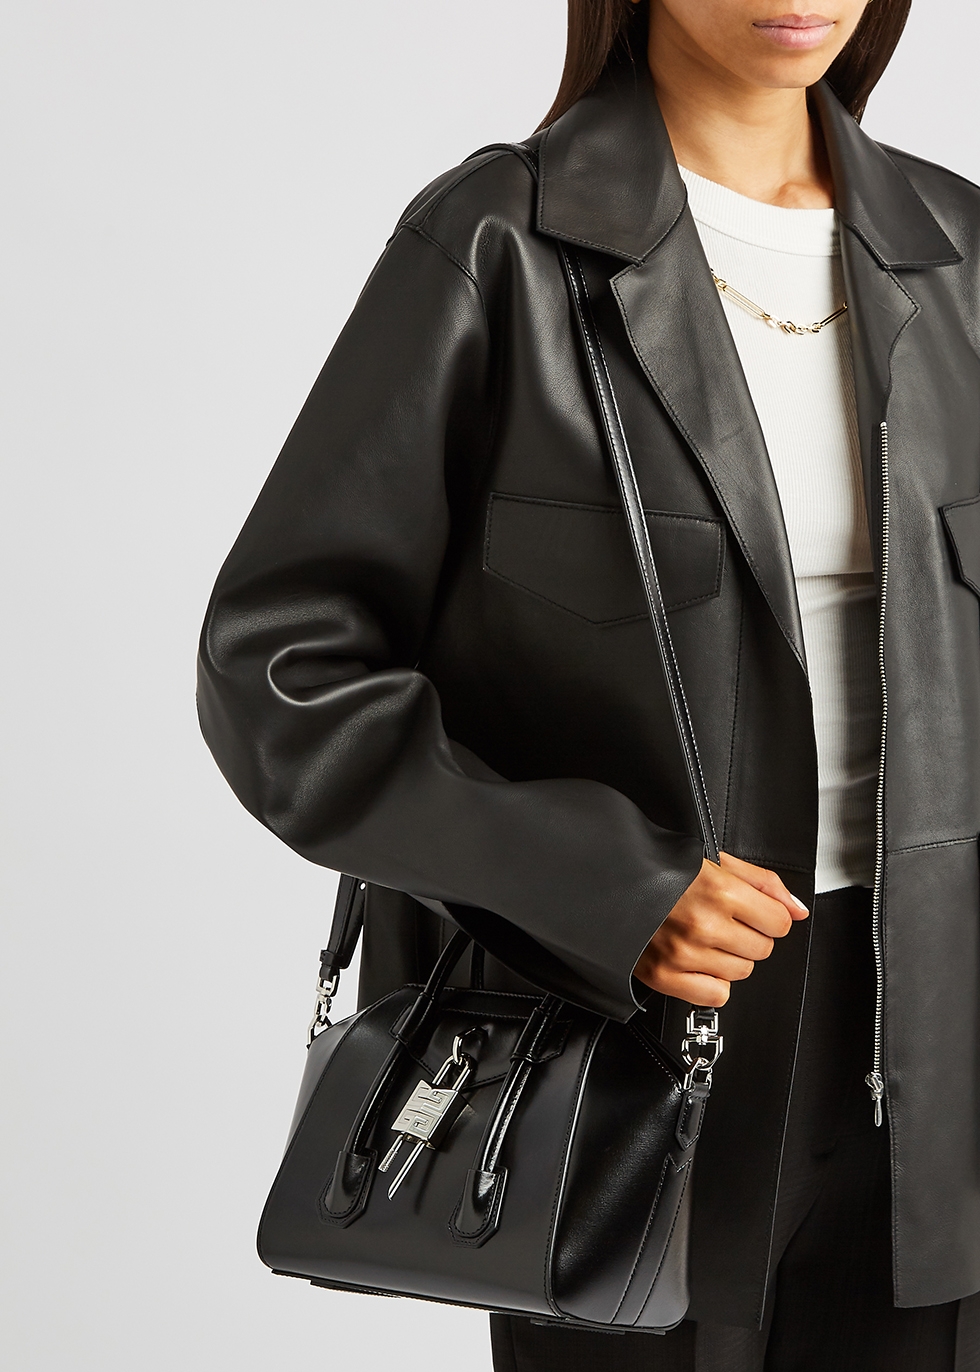 Givenchy Antigona Lock mini black leather top handle bag - Harvey 